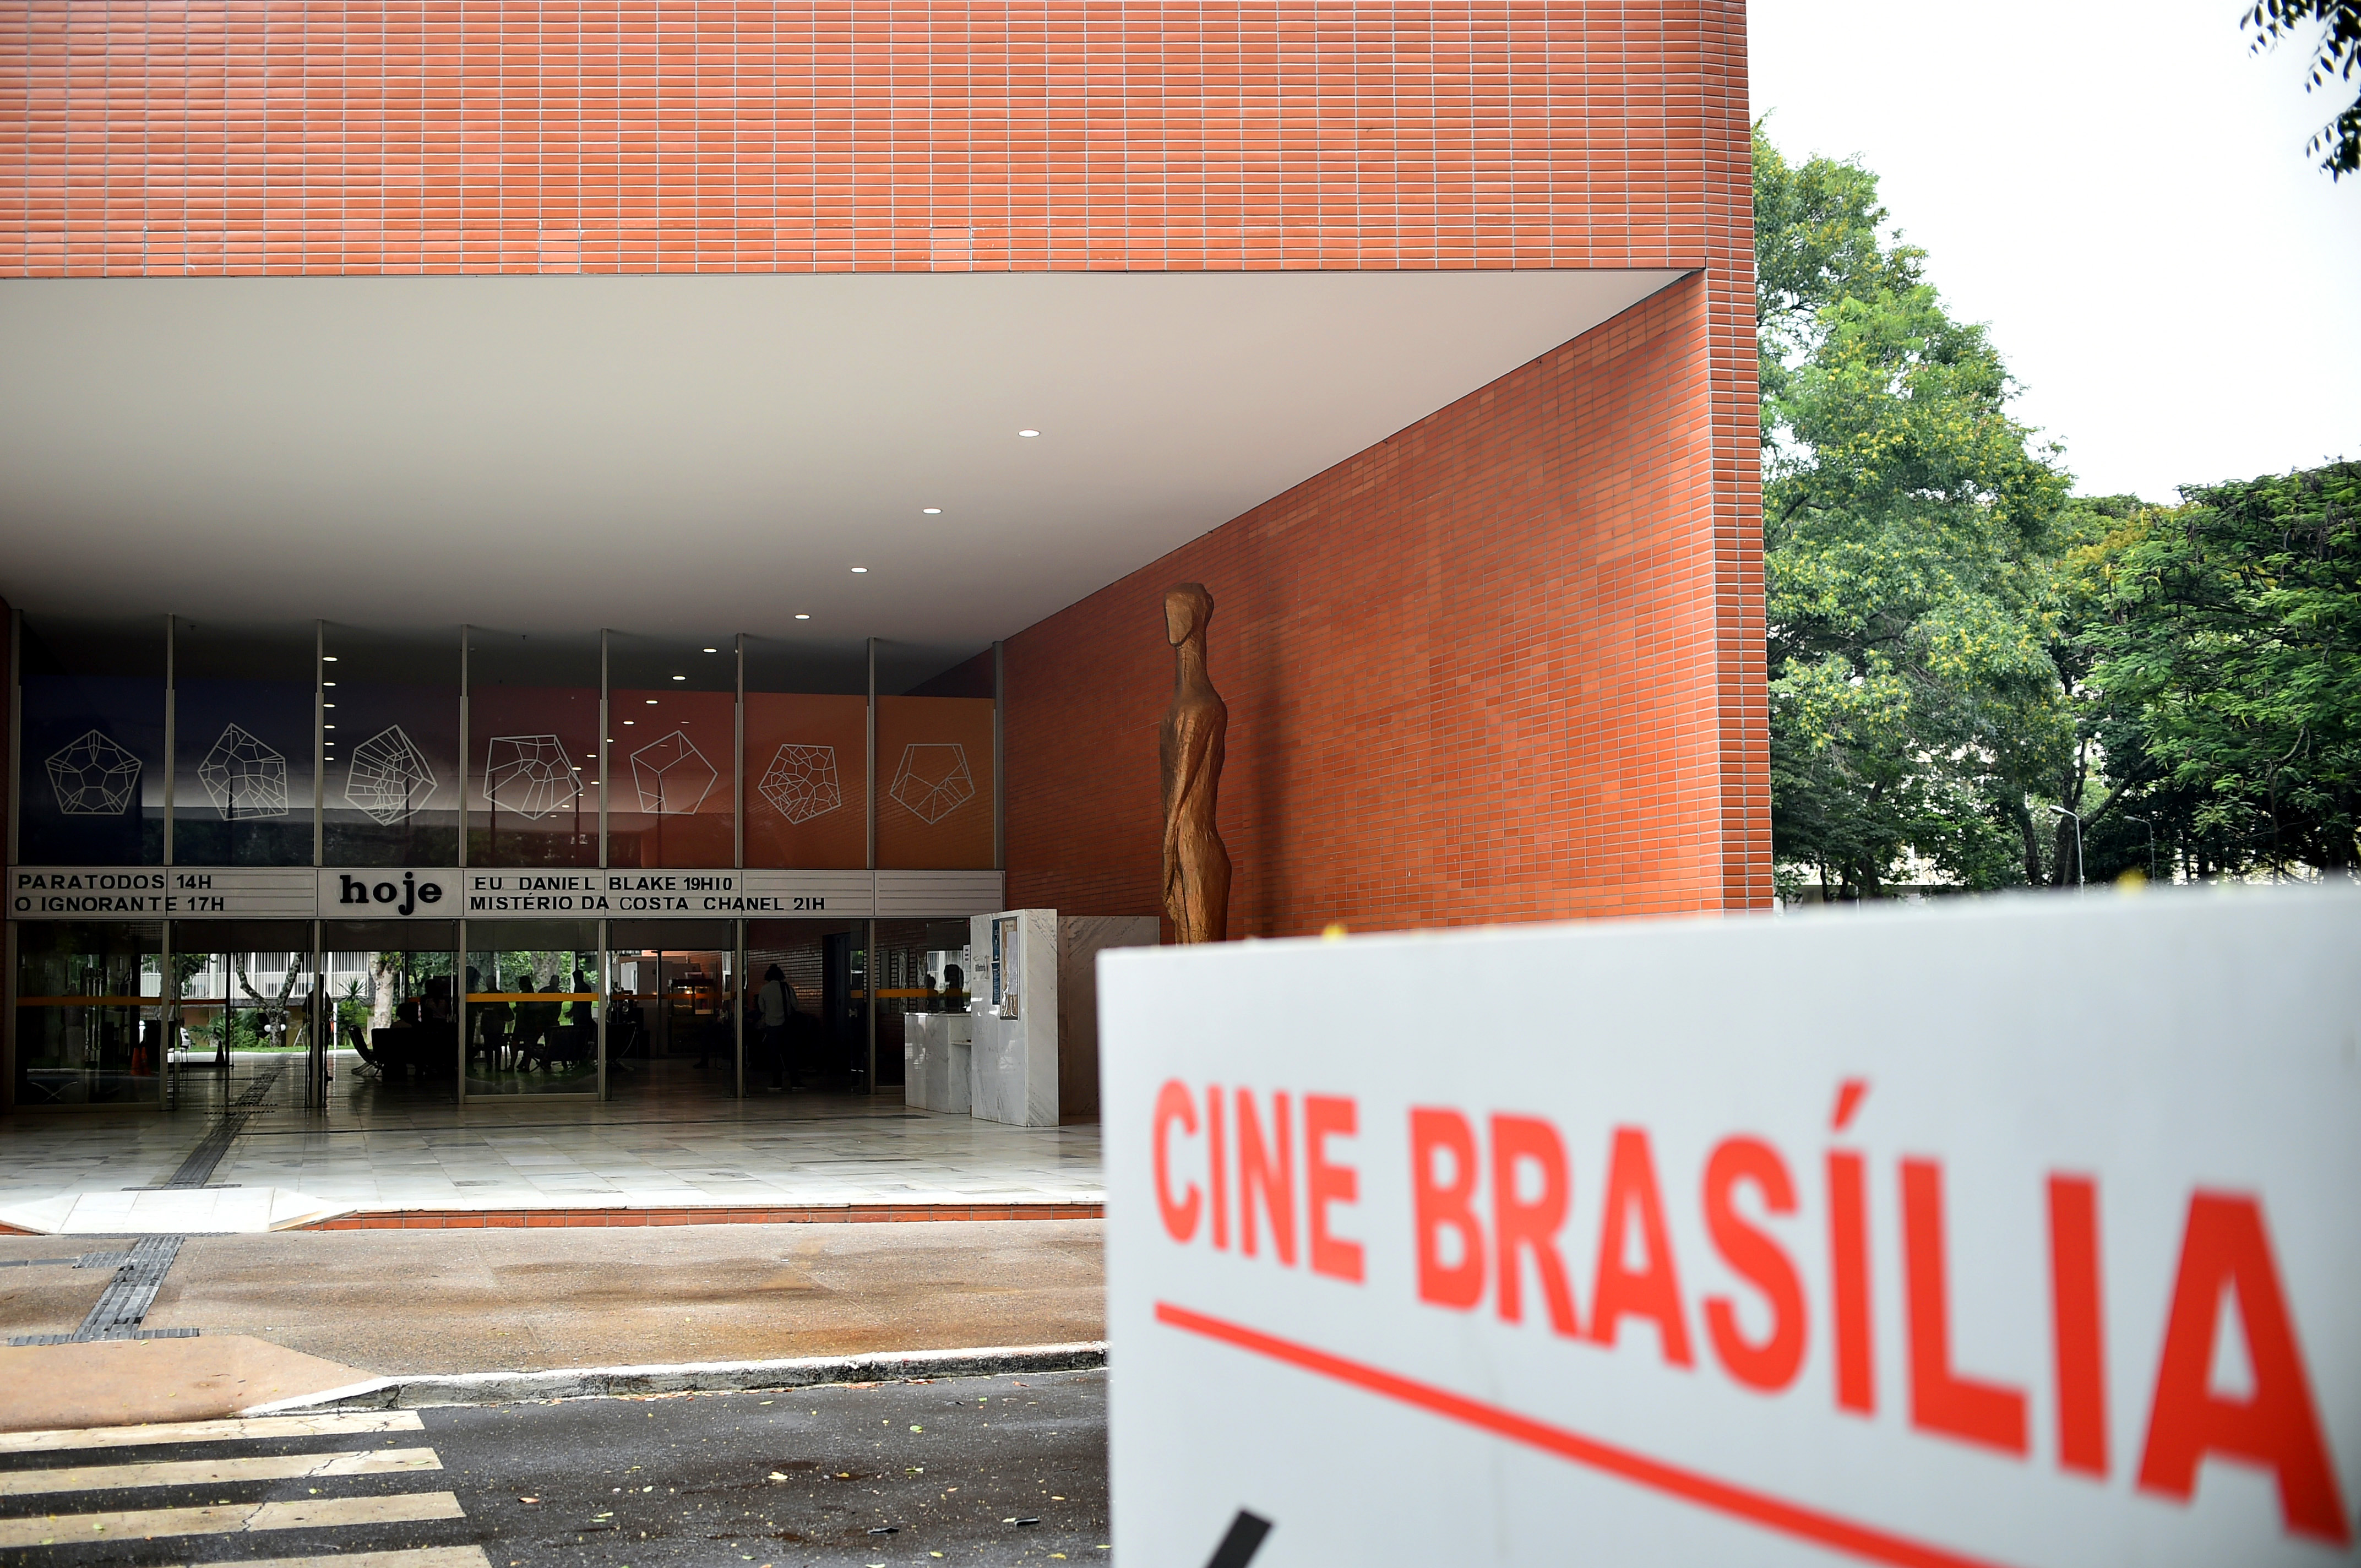 Ten films will be screened at Cine Brasília.